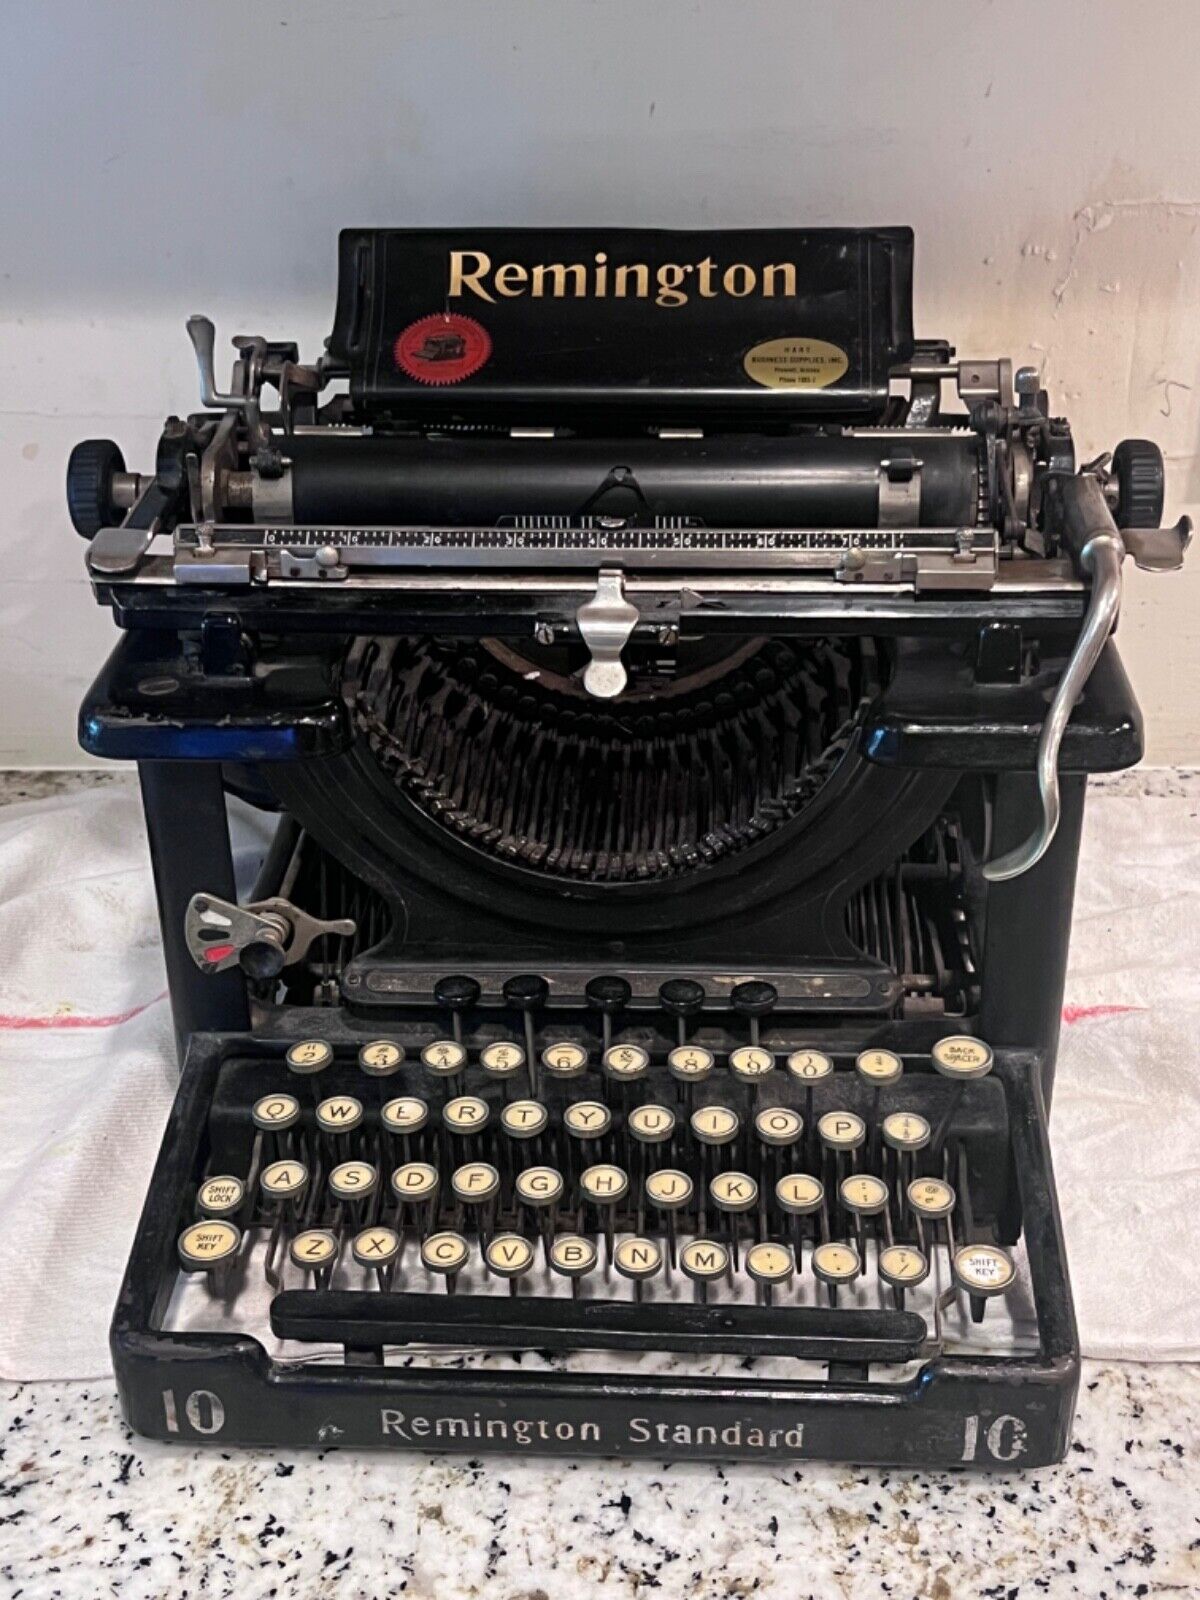 Remington Standard No. 10 Typewriter for Repair &/or Parts * A UNIQUE ANTIQUE *